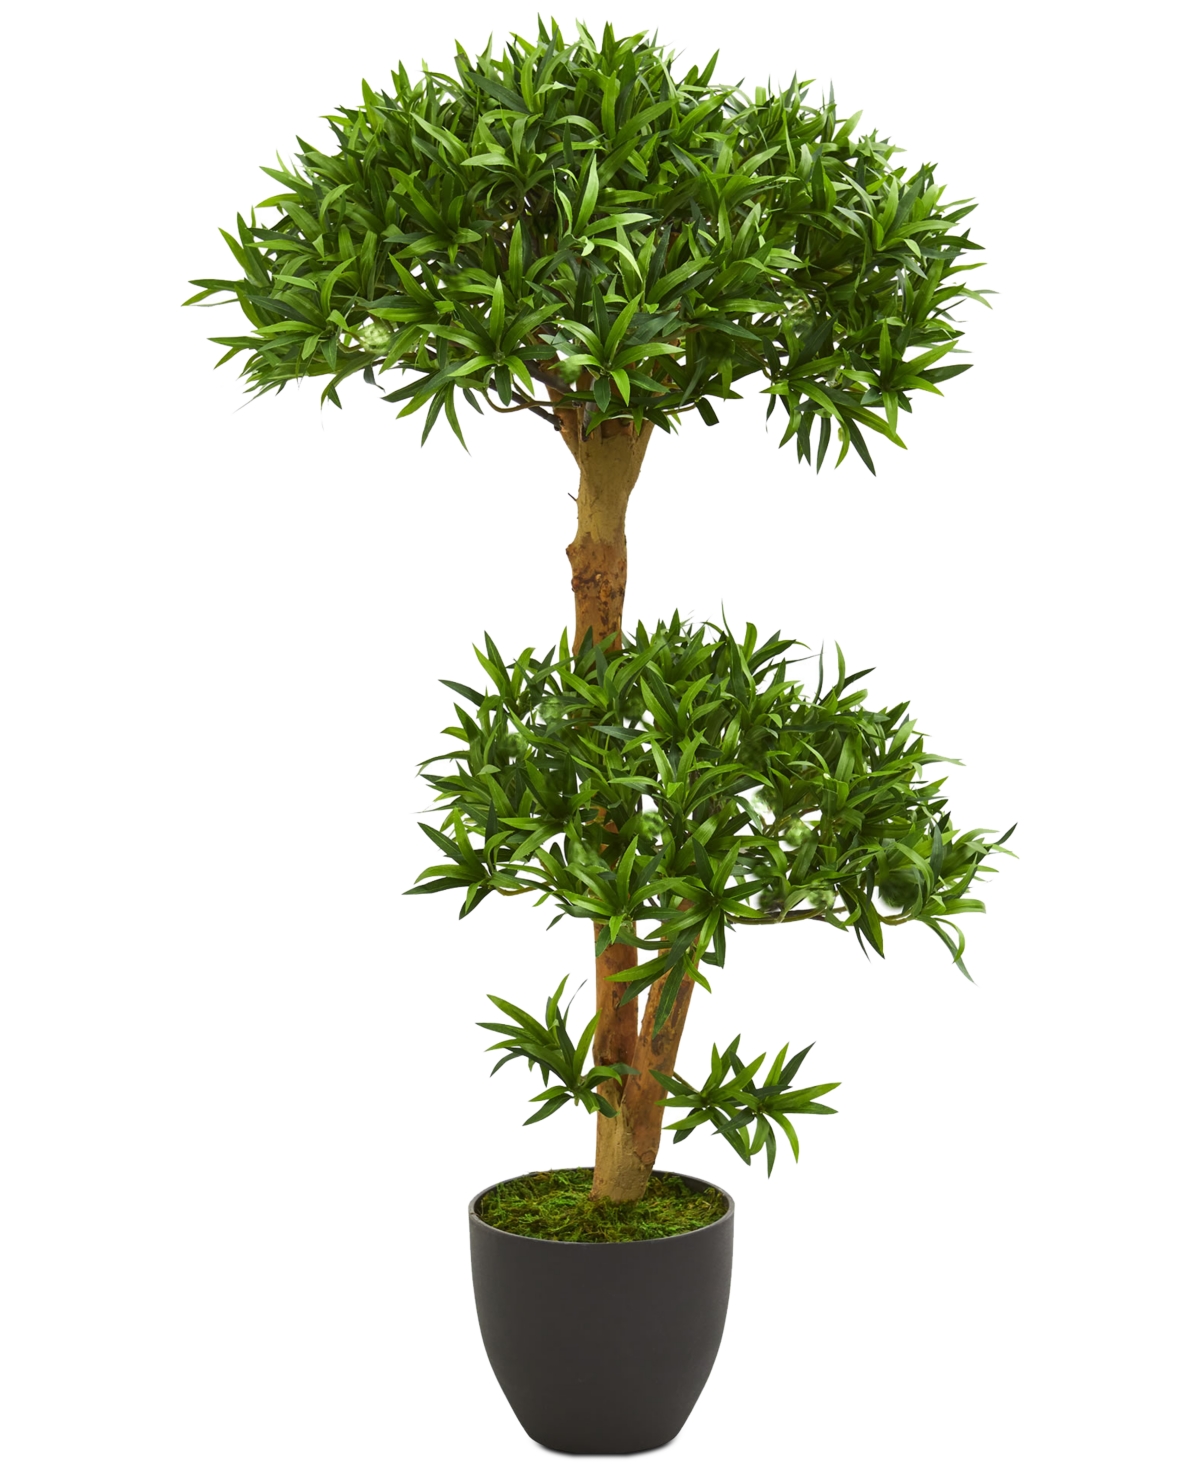 3' Bonsai-Styled Podocarpus Artificial Tree - Green